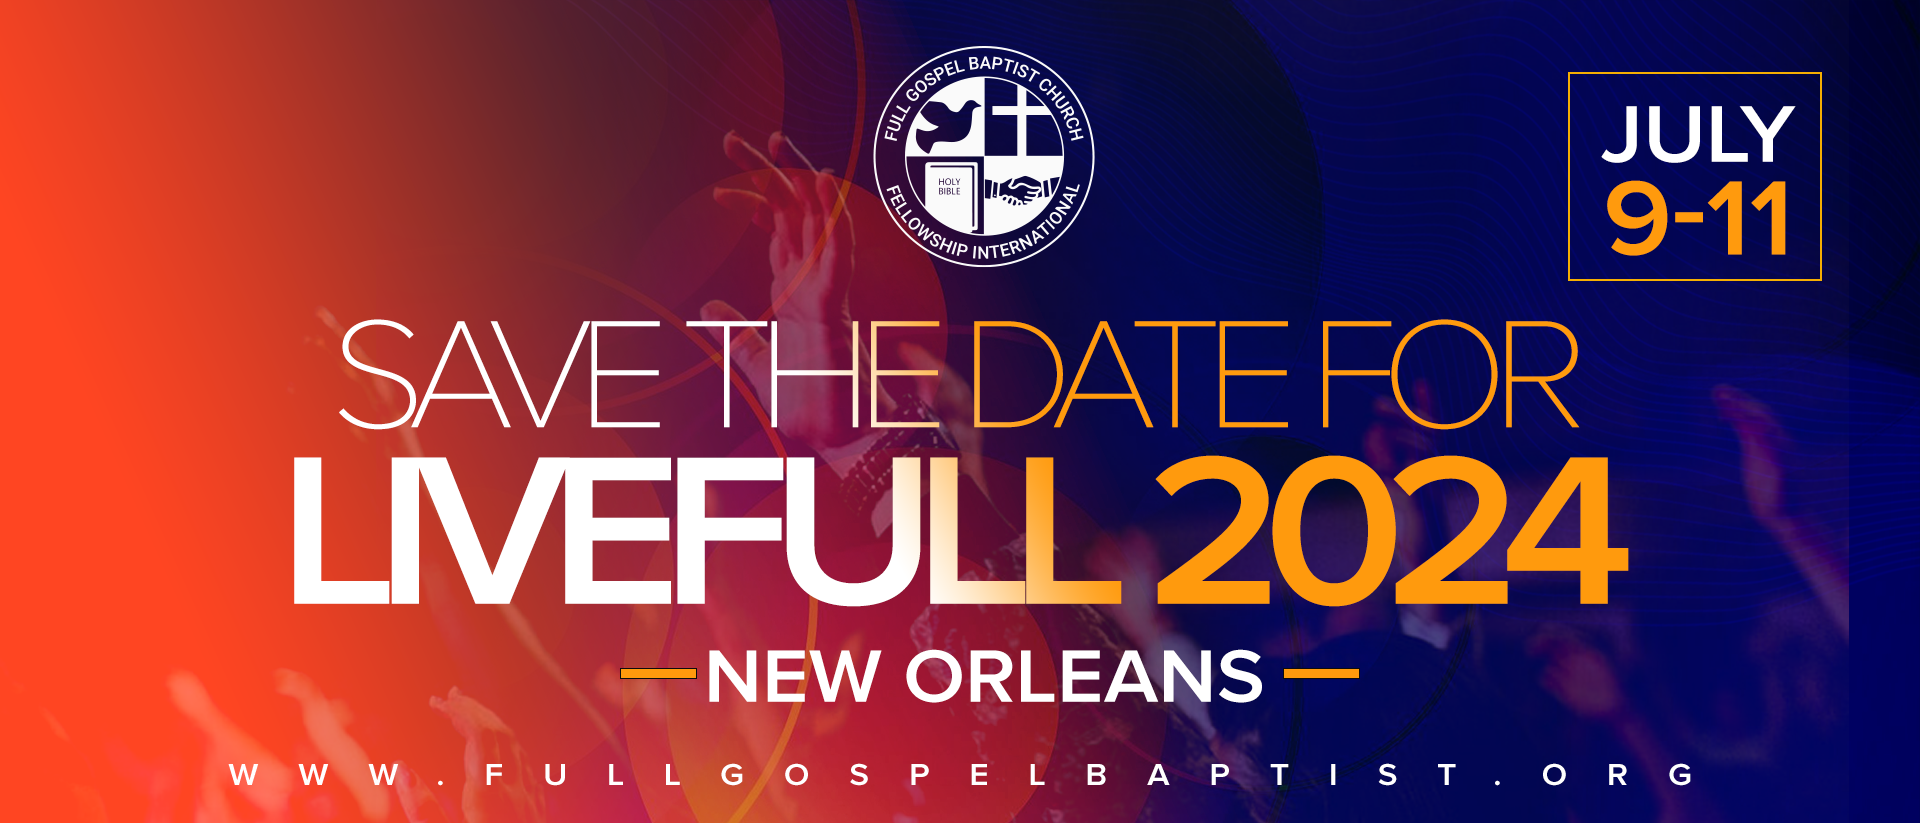 FGBCF Conferences Full Gospel Baptist